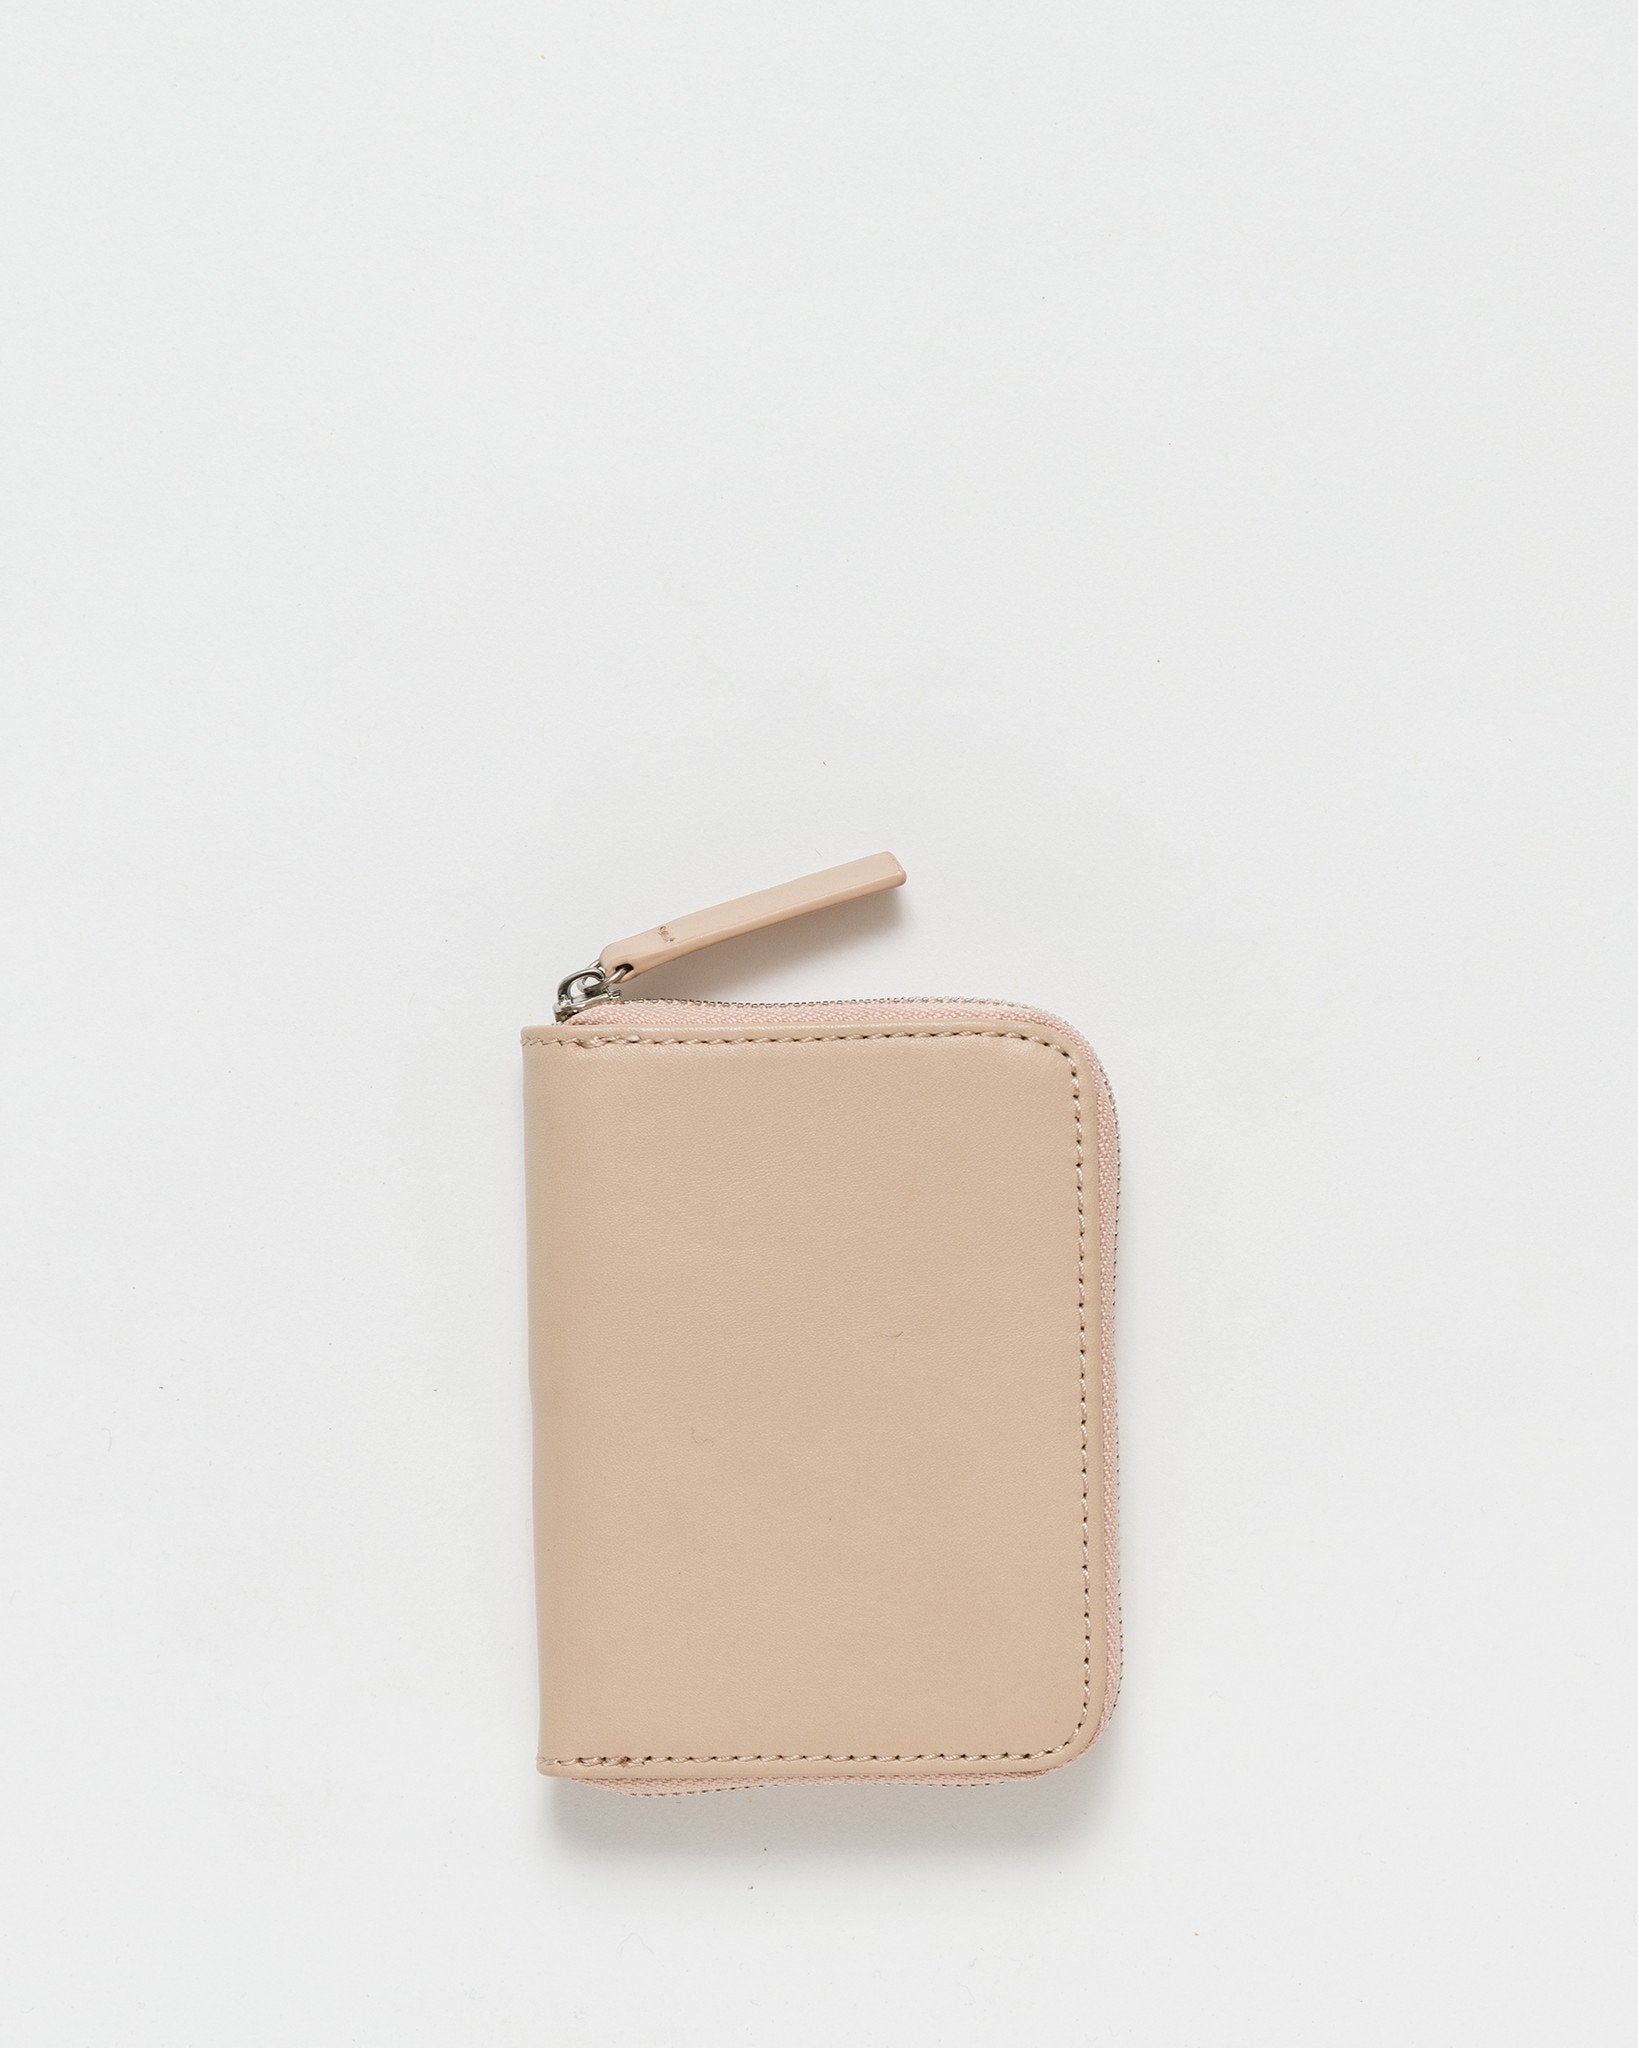 Tan leather short wallet